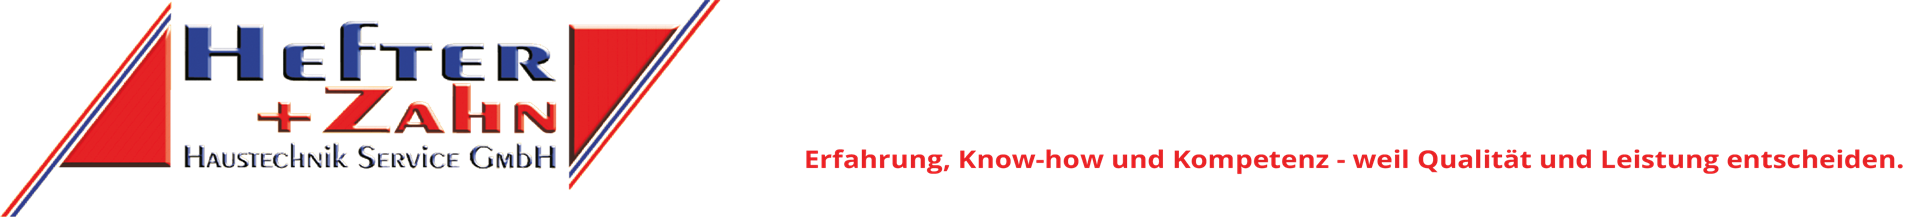 Hefter + Zahn Haustechnik Service GmbH